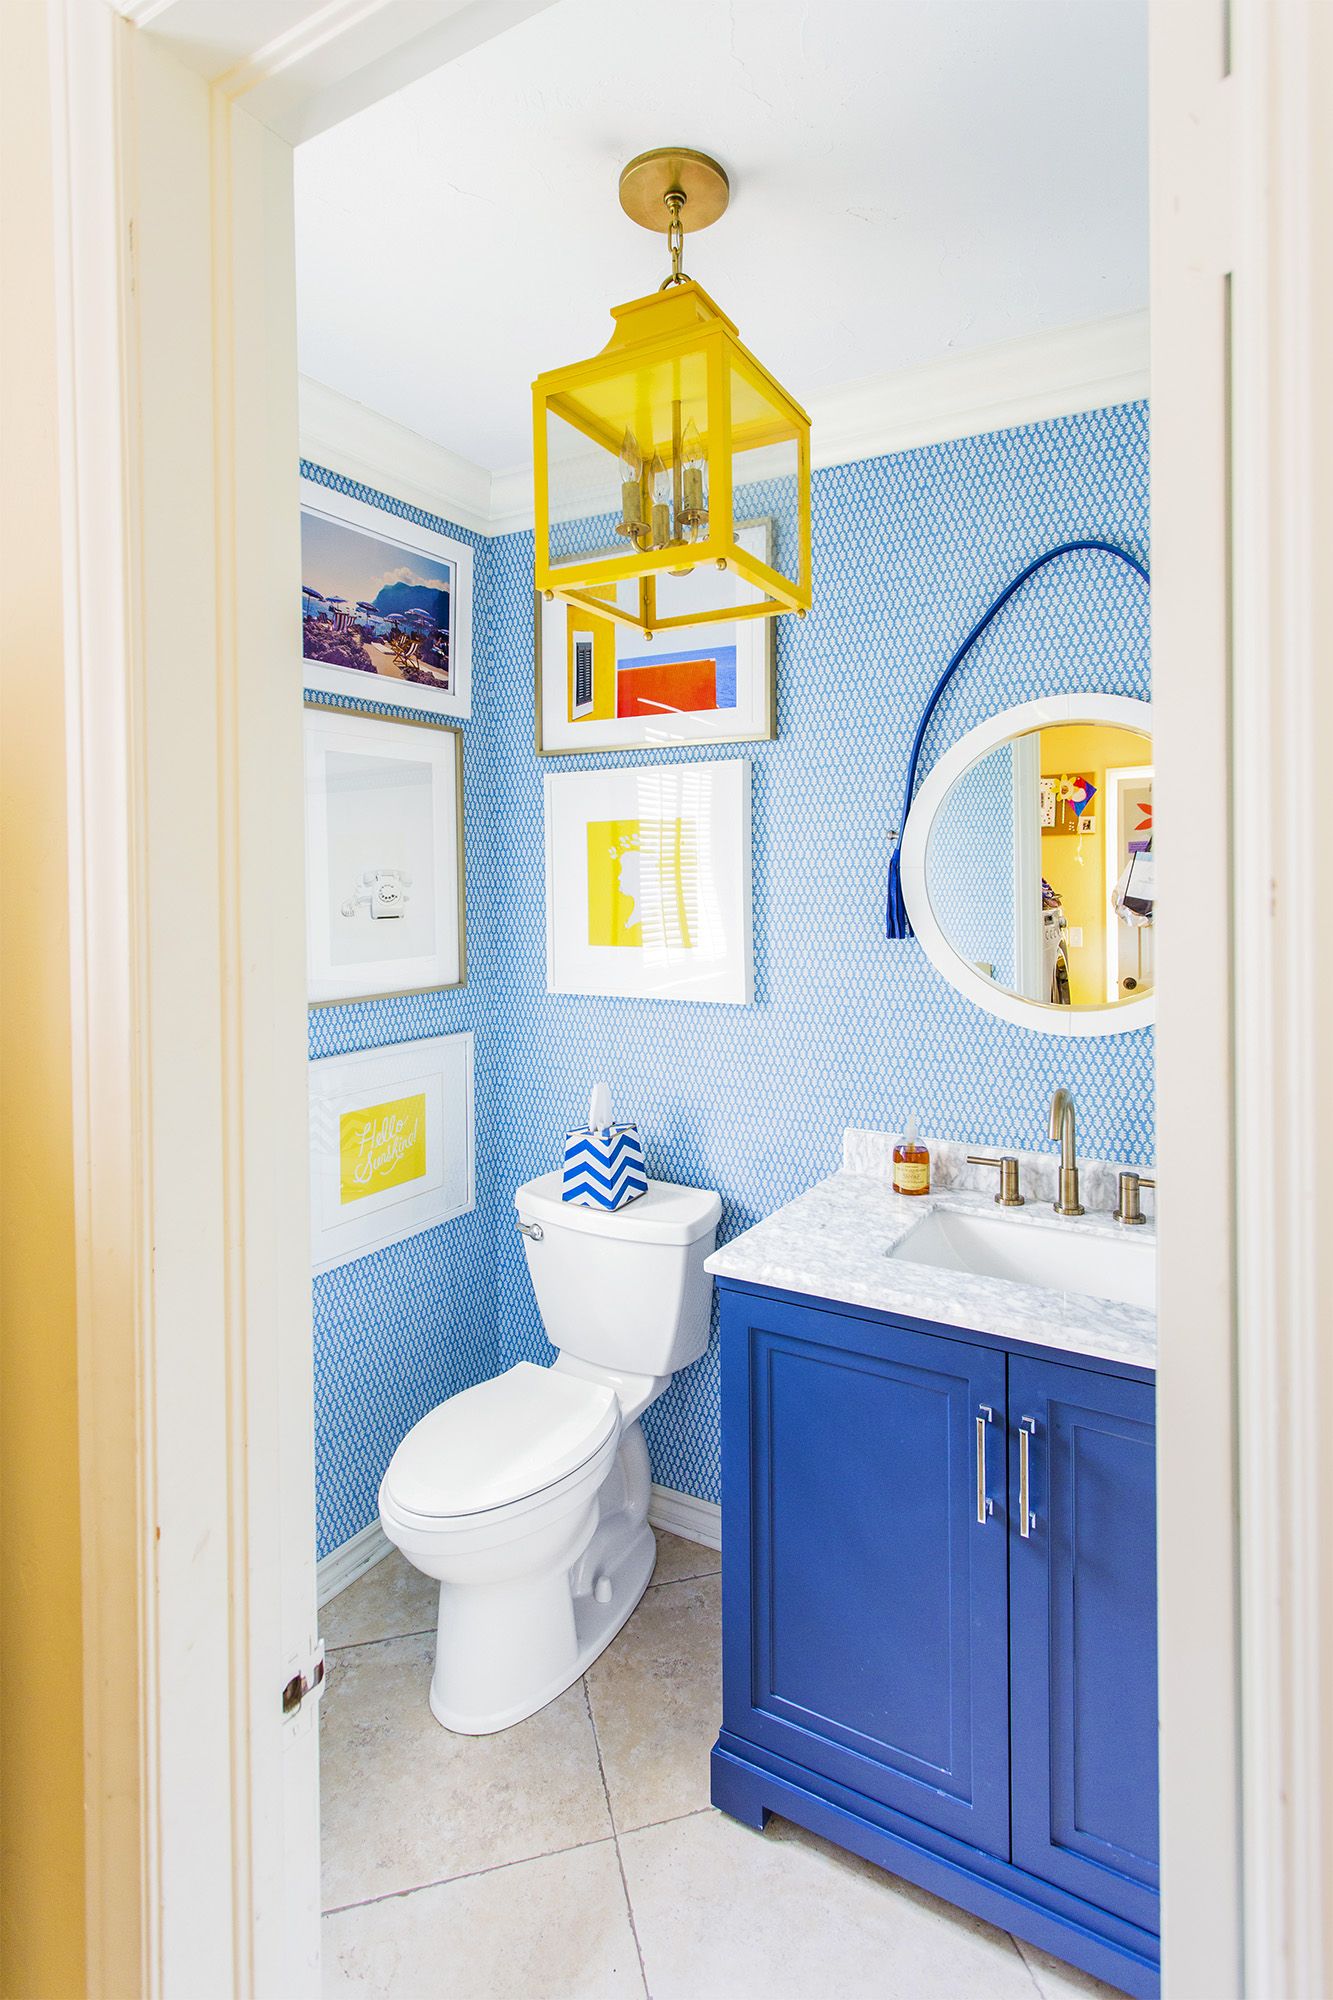 Bathroom ideas: 70 bathroom designs you will love |